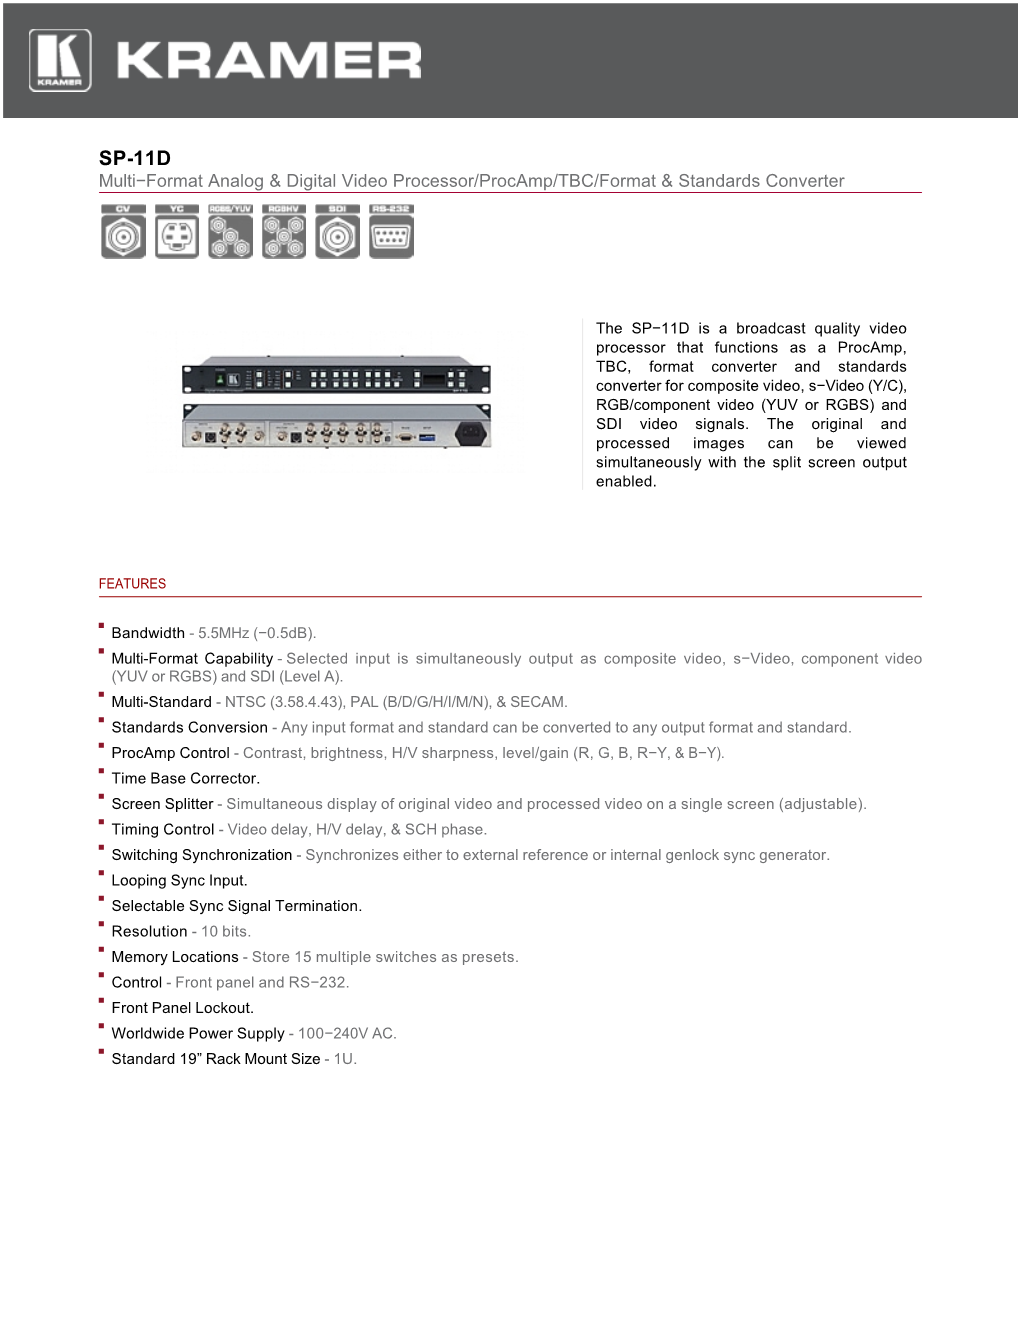 SP-11D Multi−Format Analog & Digital Video Processor/Procamp/TBC/Format & Standards Converter